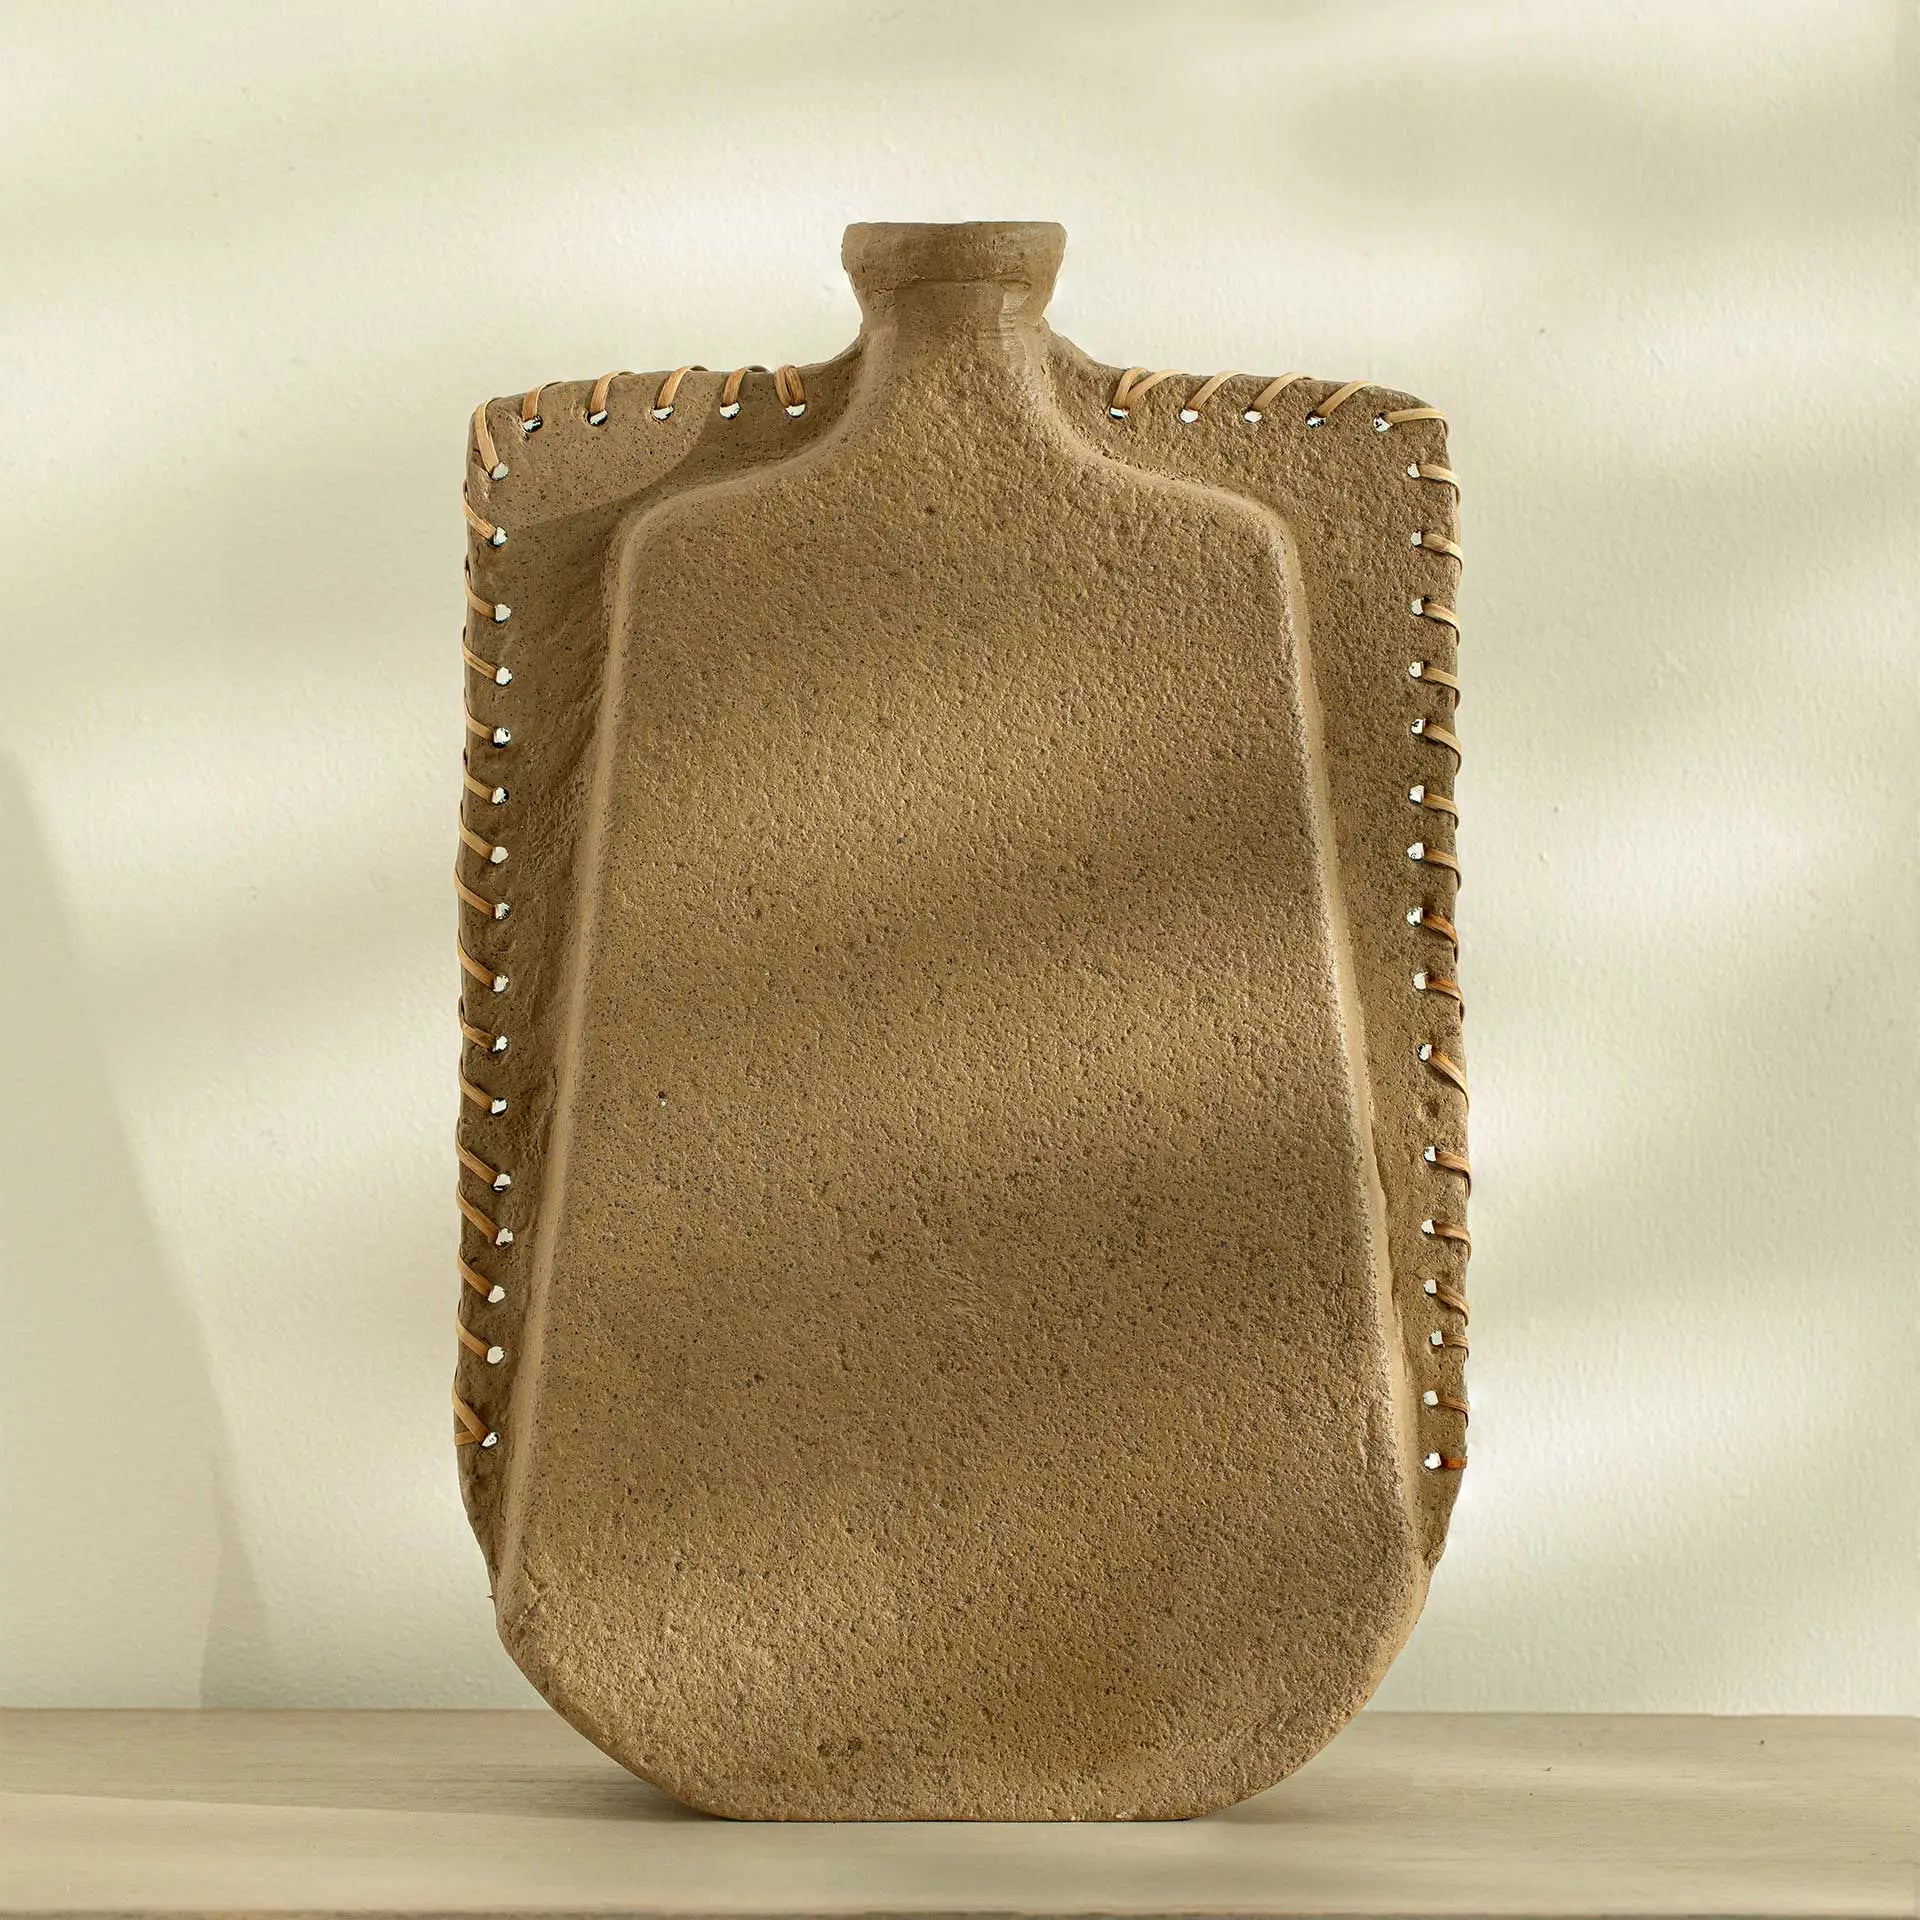 Niraan Ecomix Vase With Cane Tall